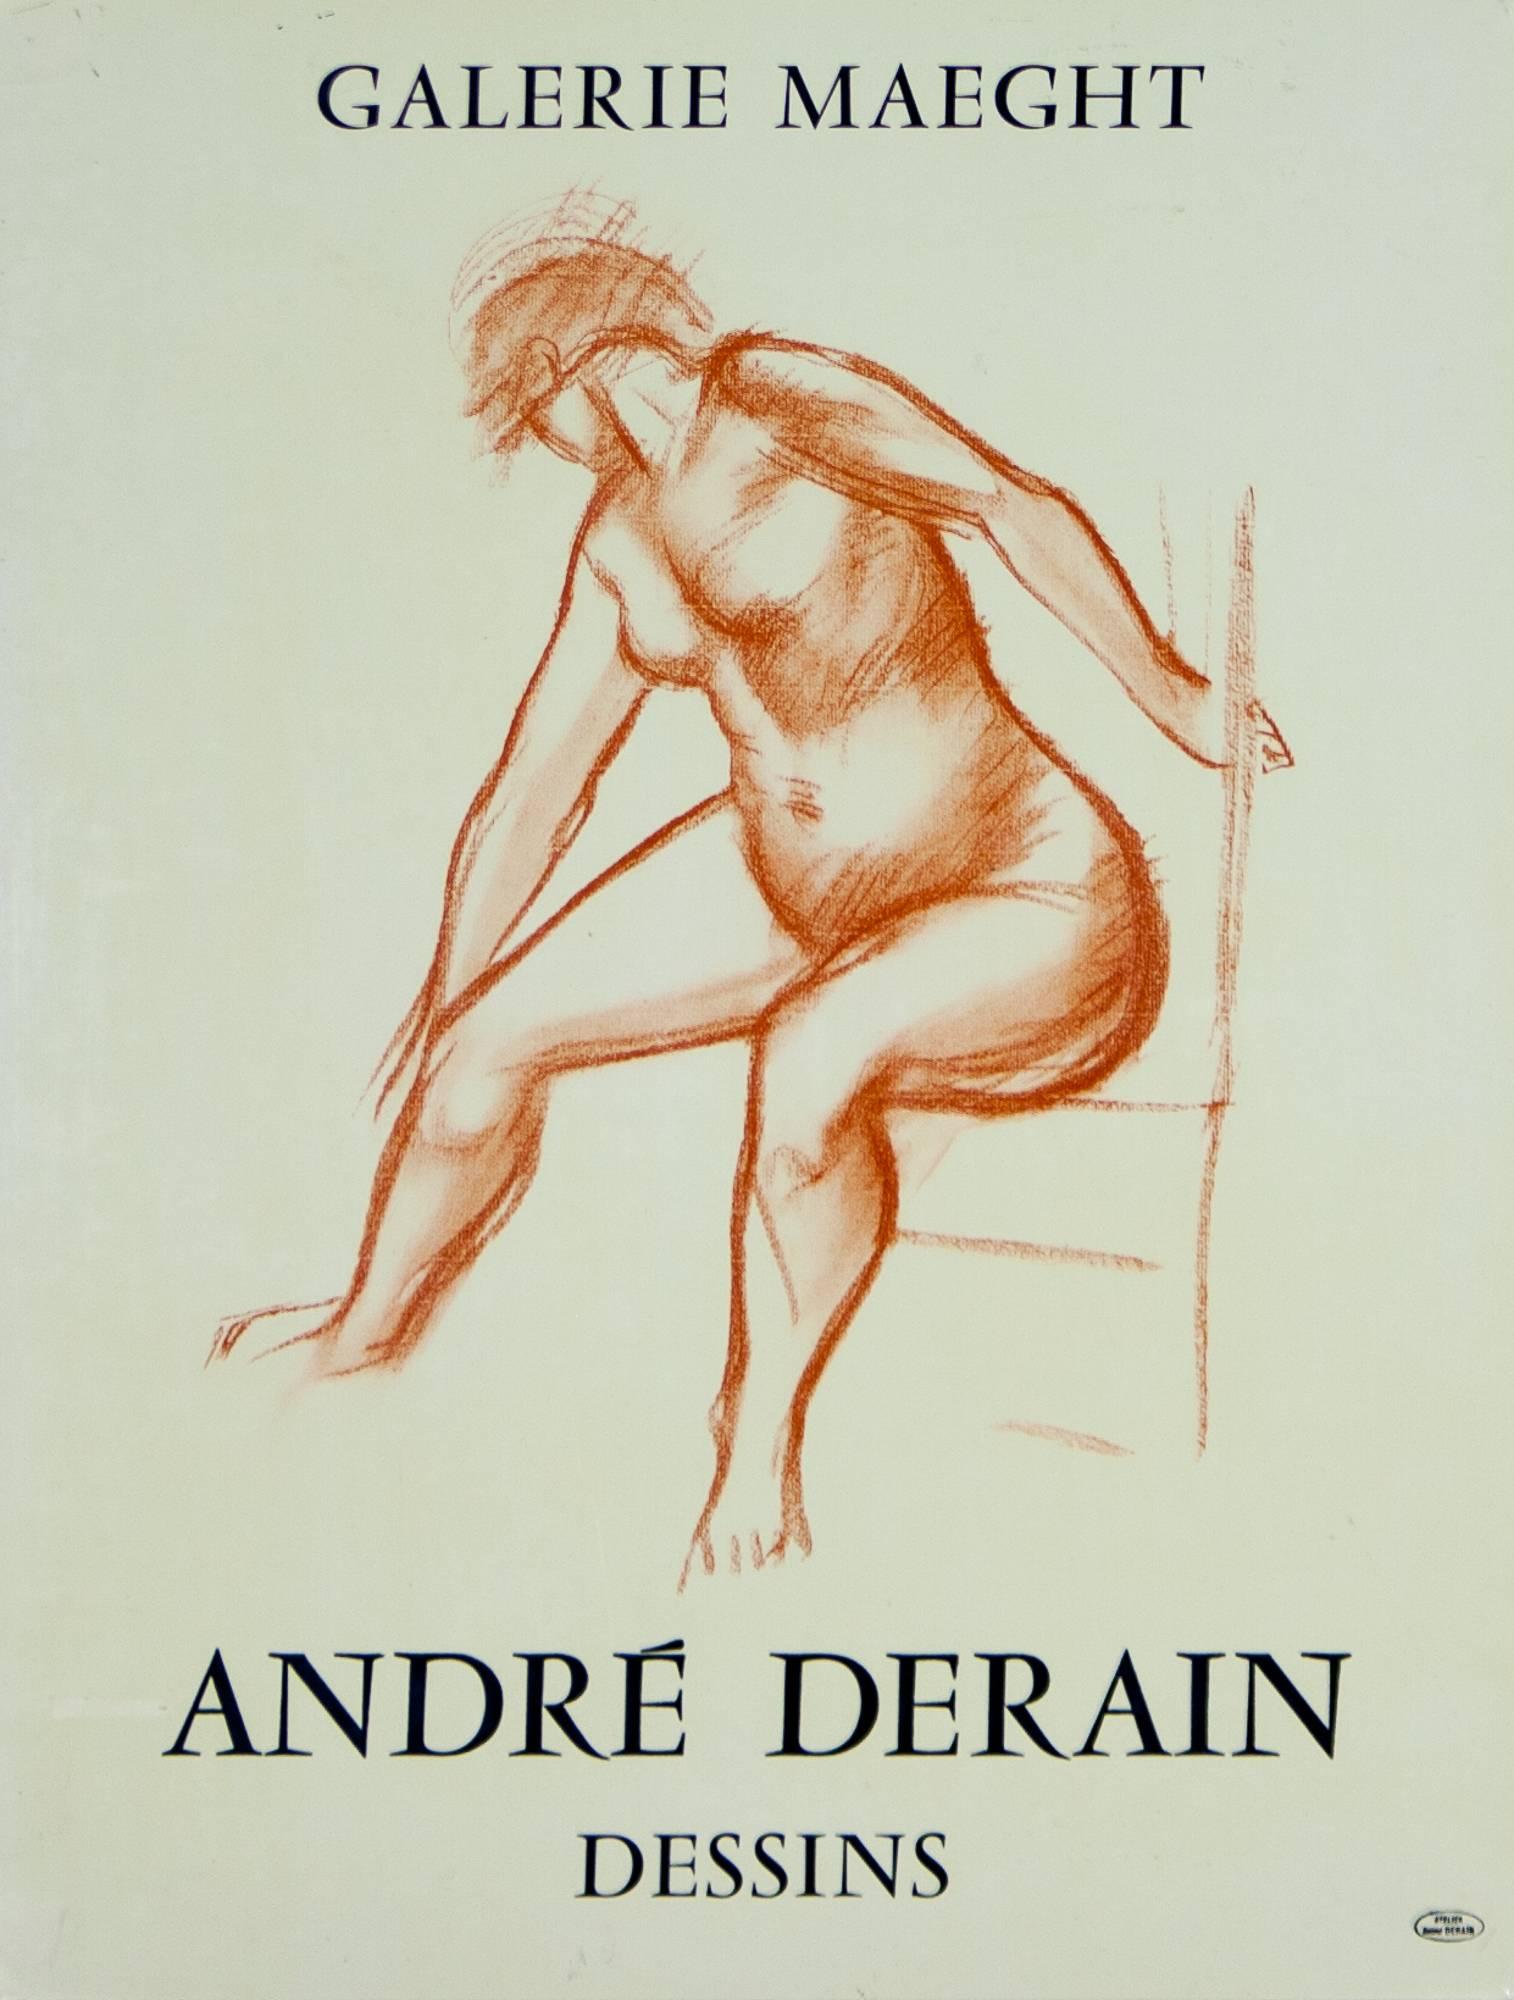 André Derain Nude Print - Andre Derain Dessins Galeries Maeght 